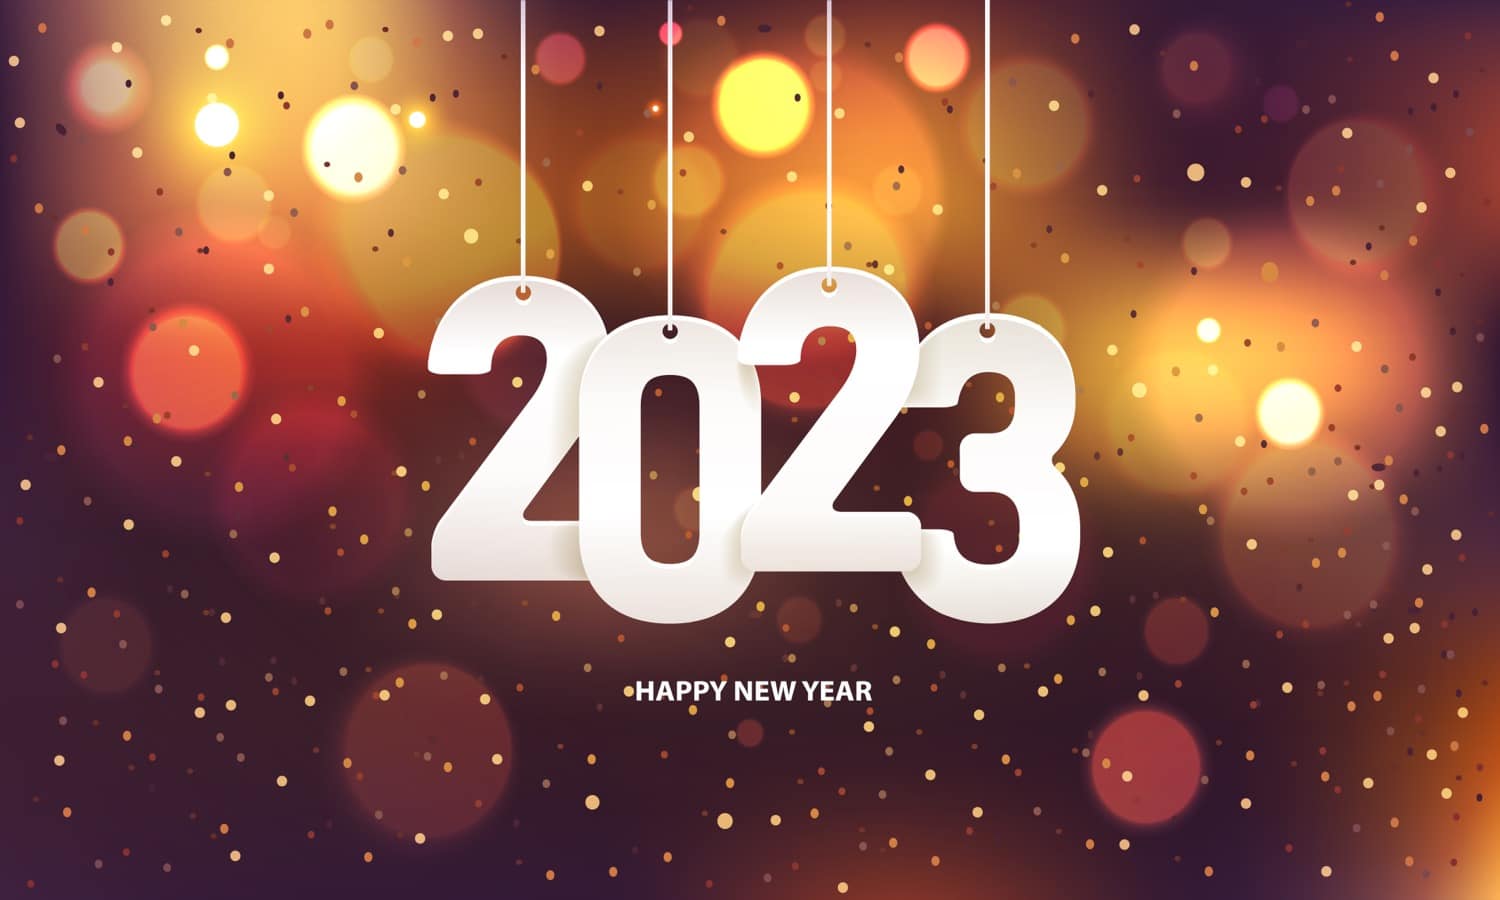 Hueblog: Hueblog wishes you a happy new year